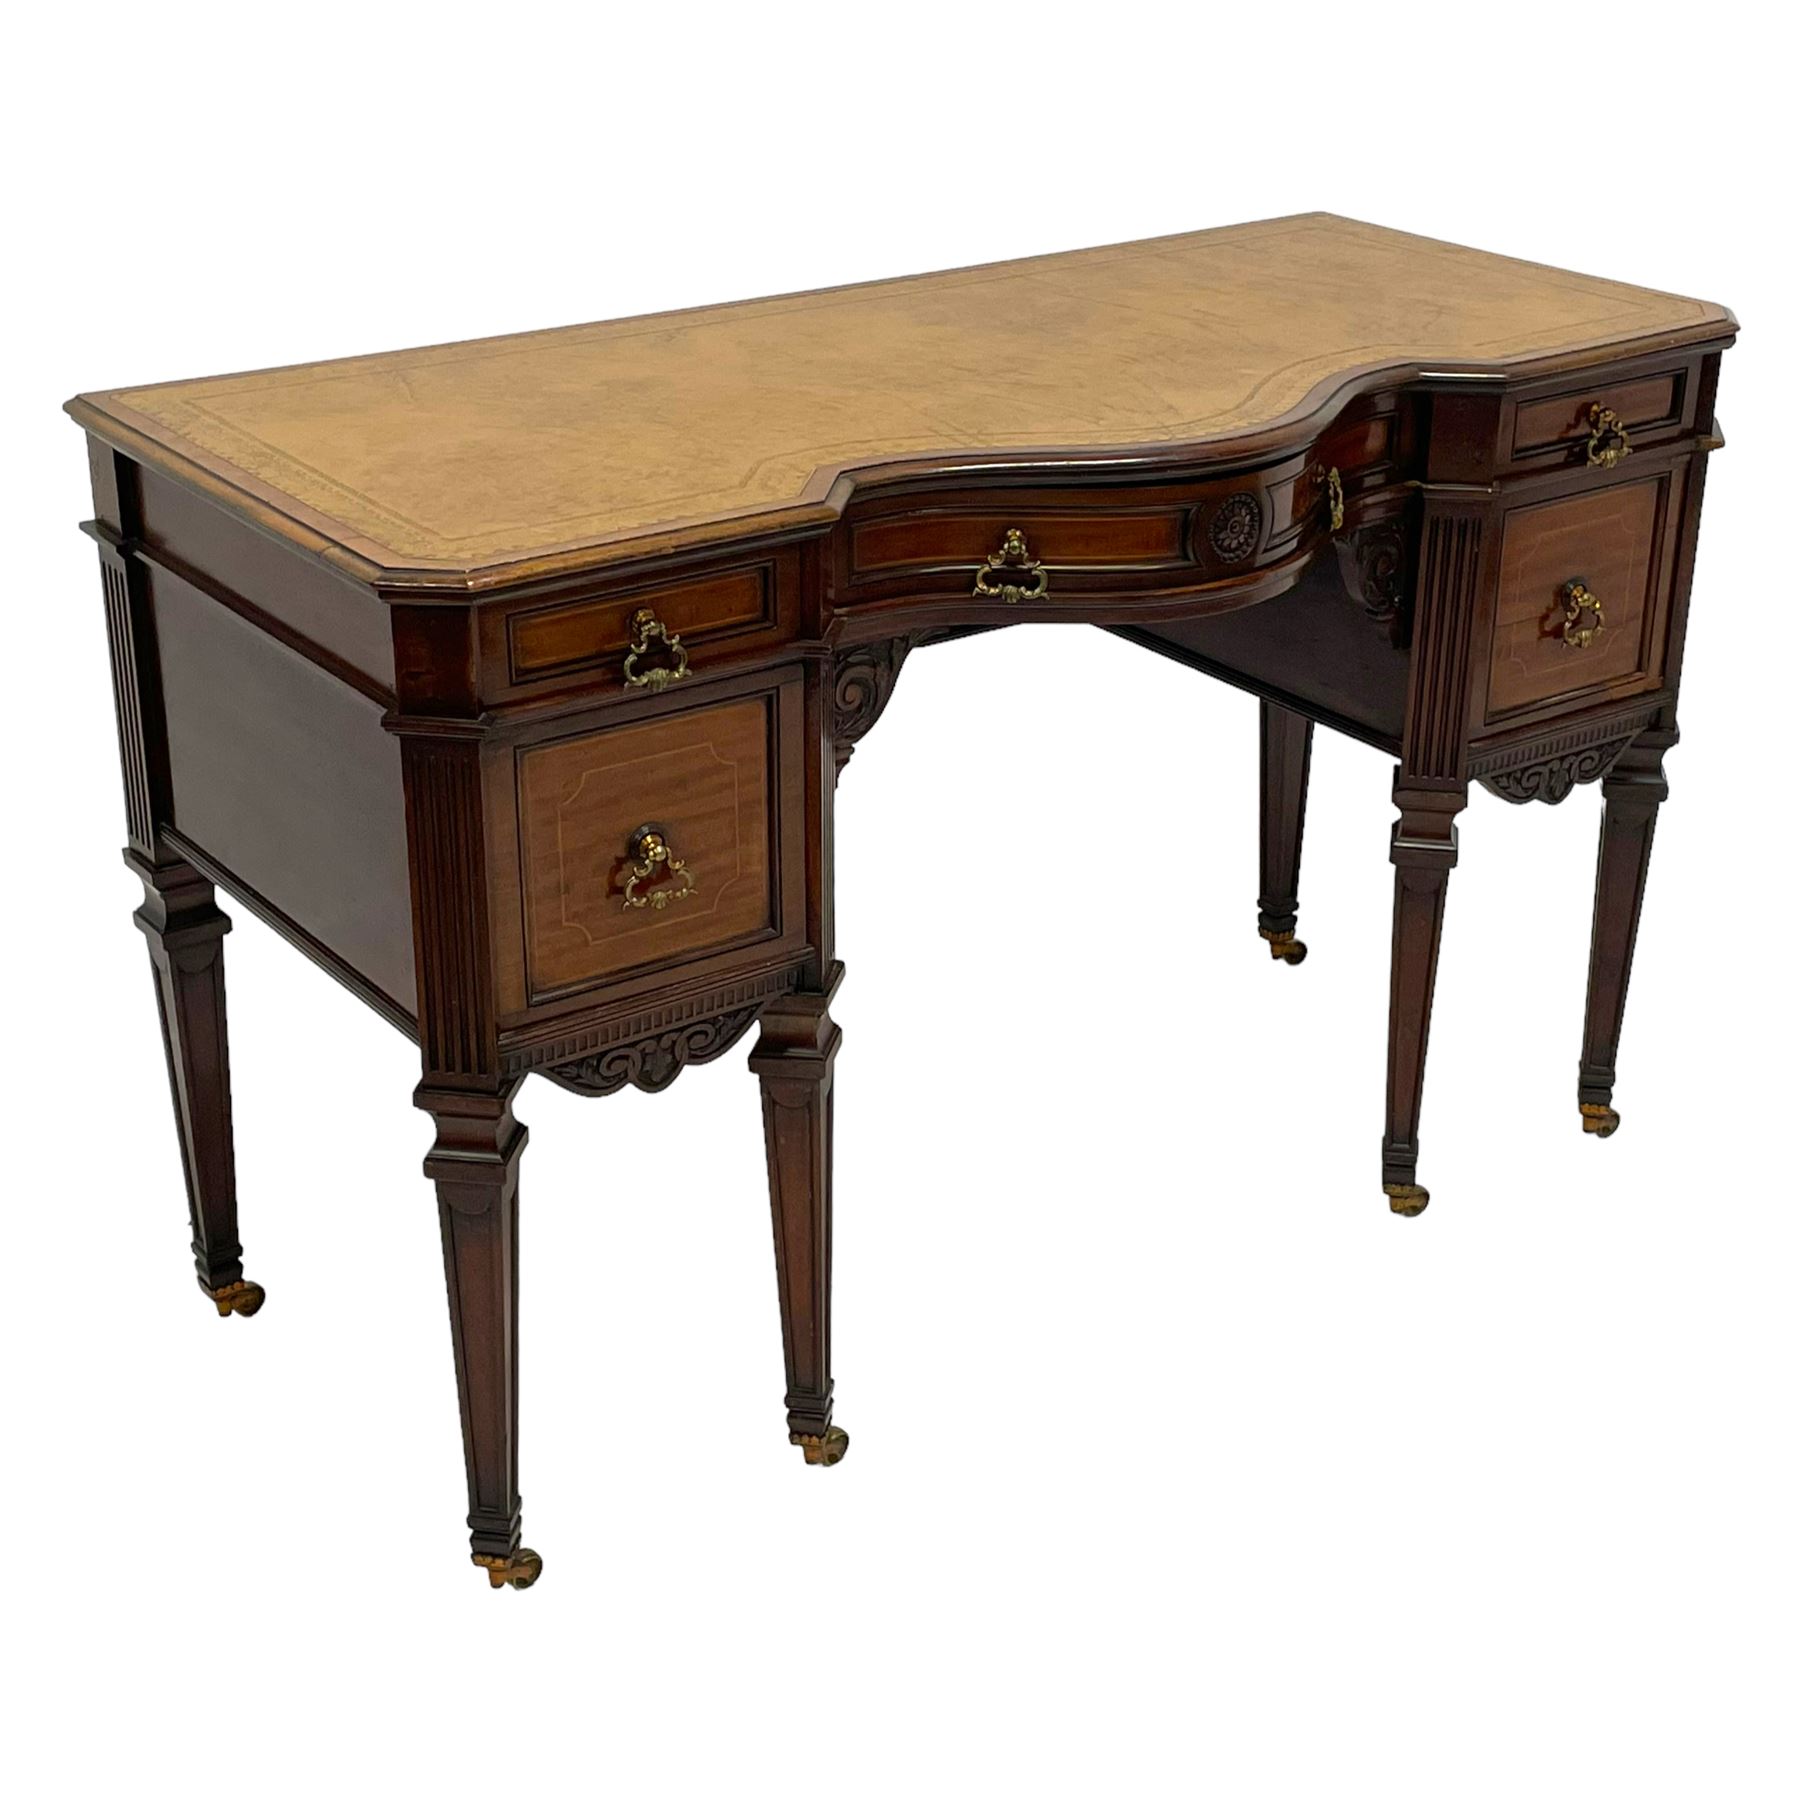 Late 19th century mahogany writing desk - Image 9 of 18